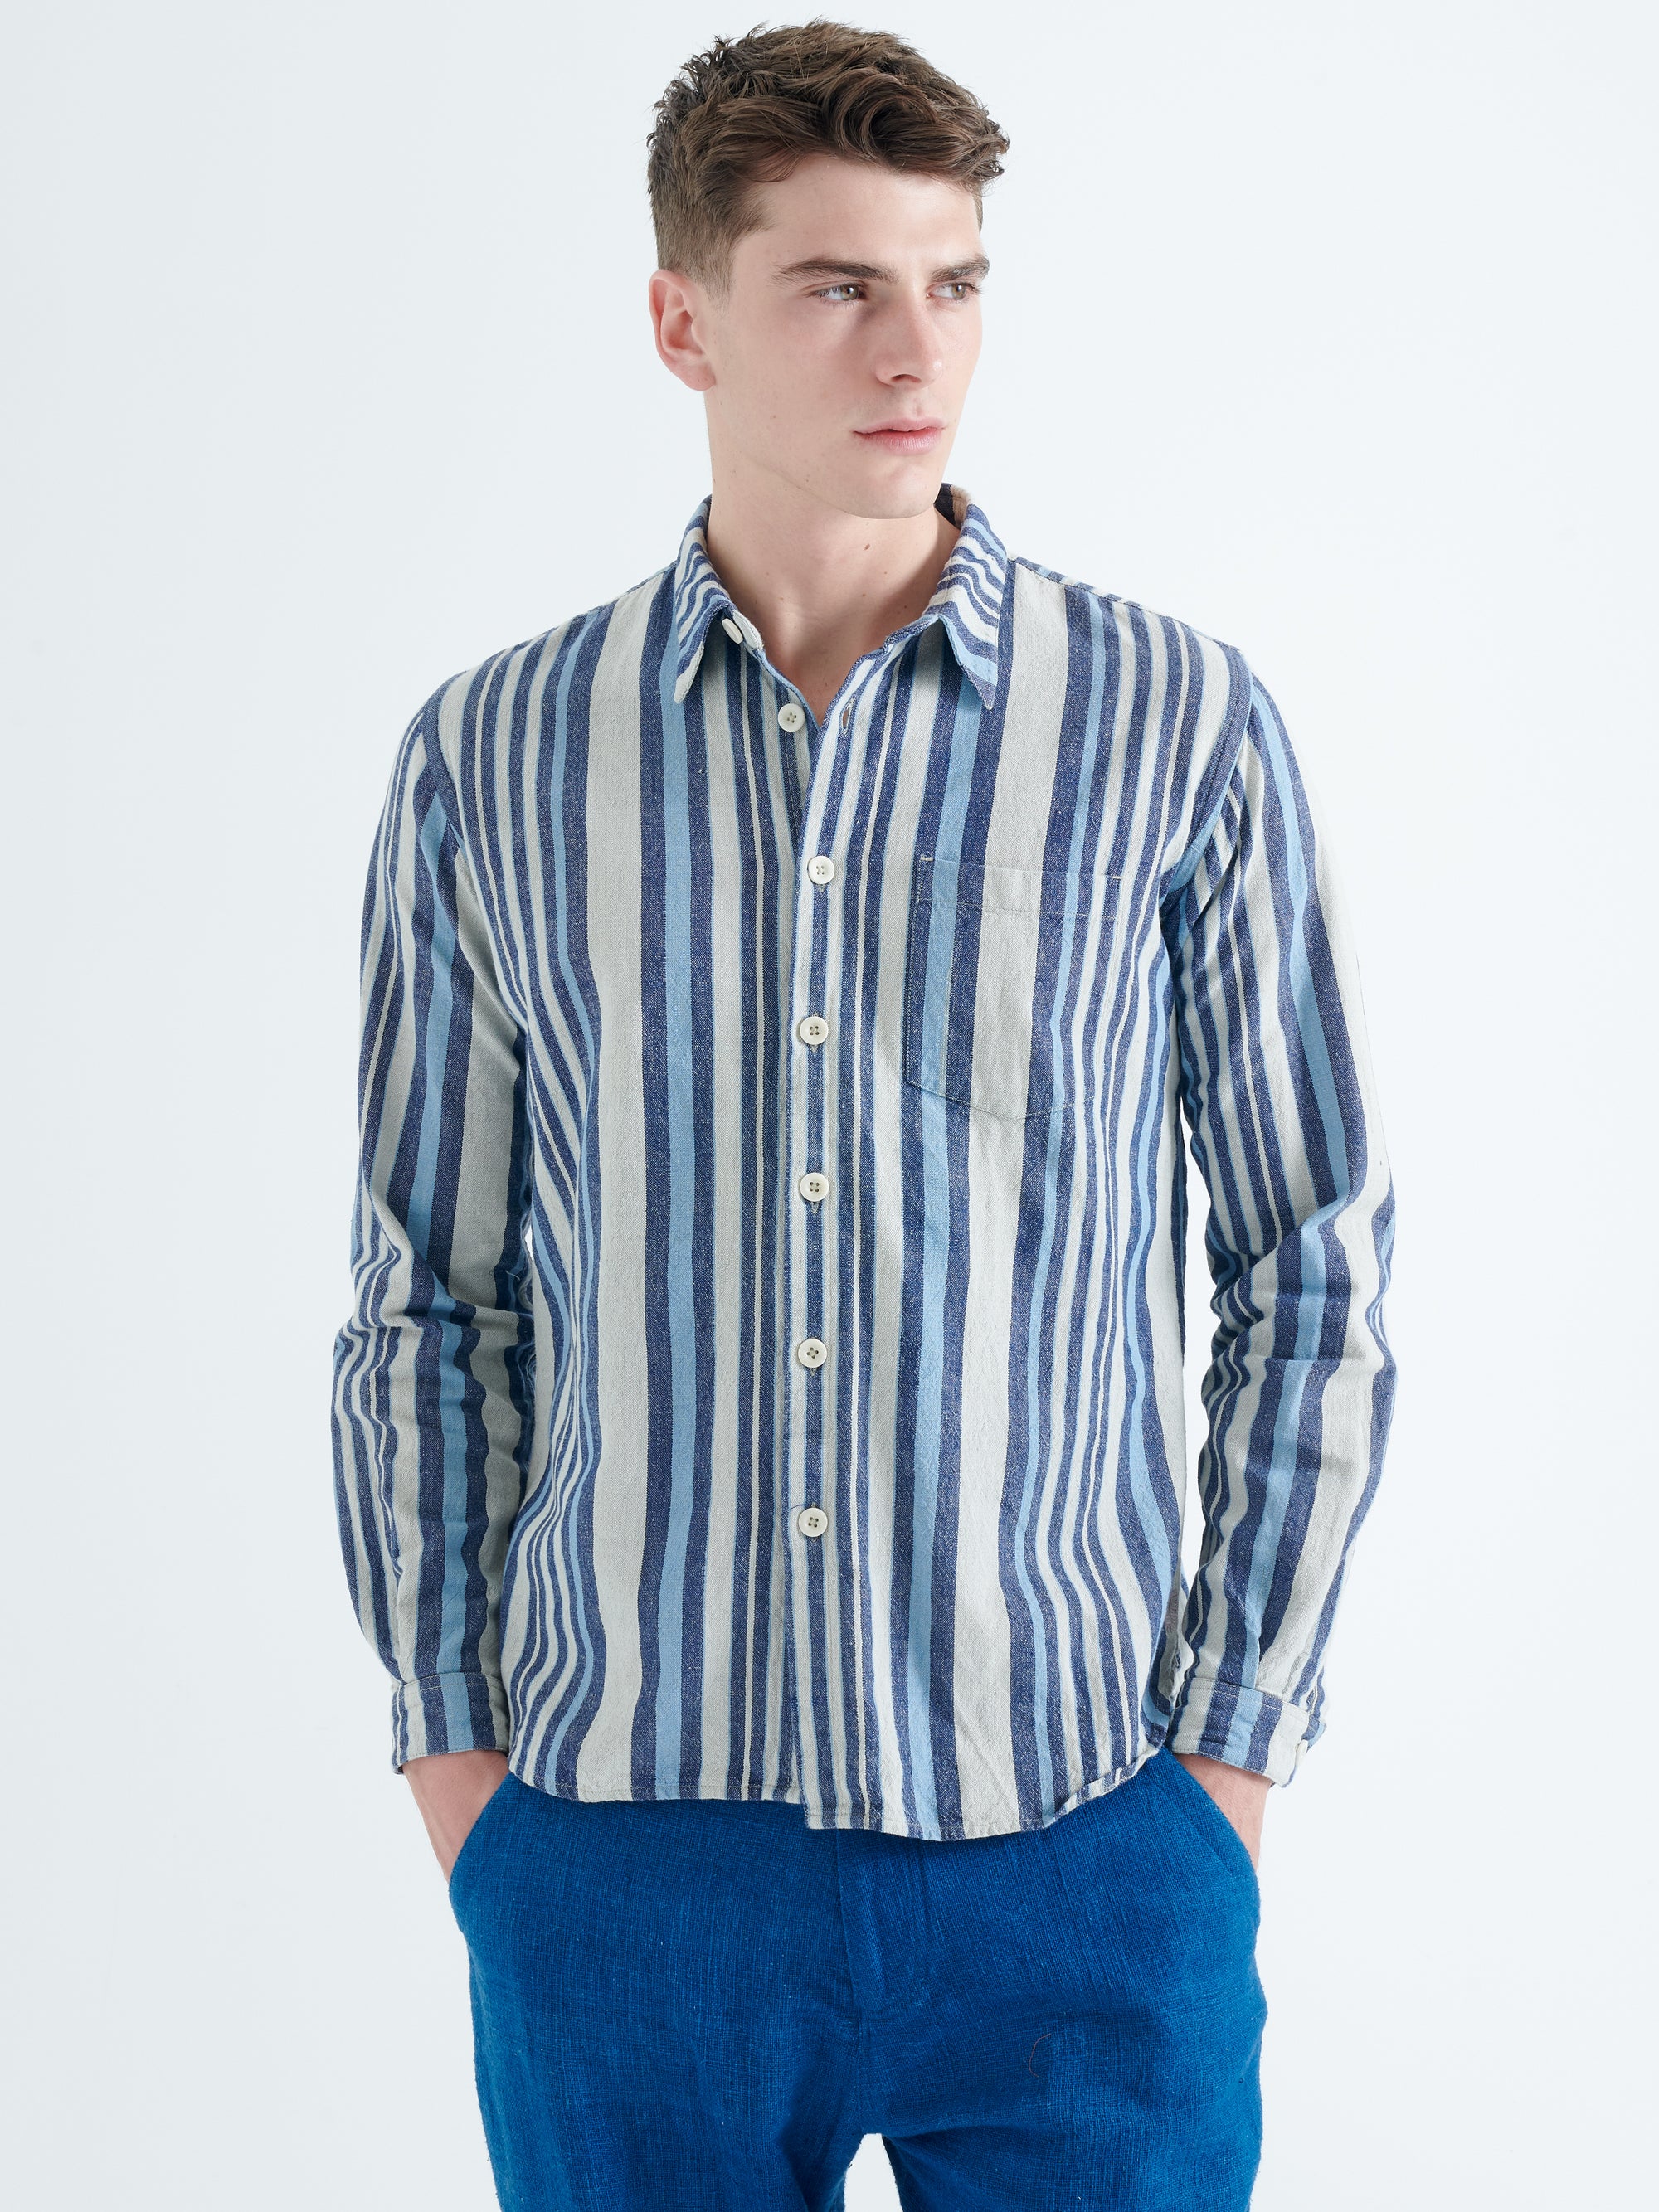 Enamorados Cotton Shirt in Blue Stripes